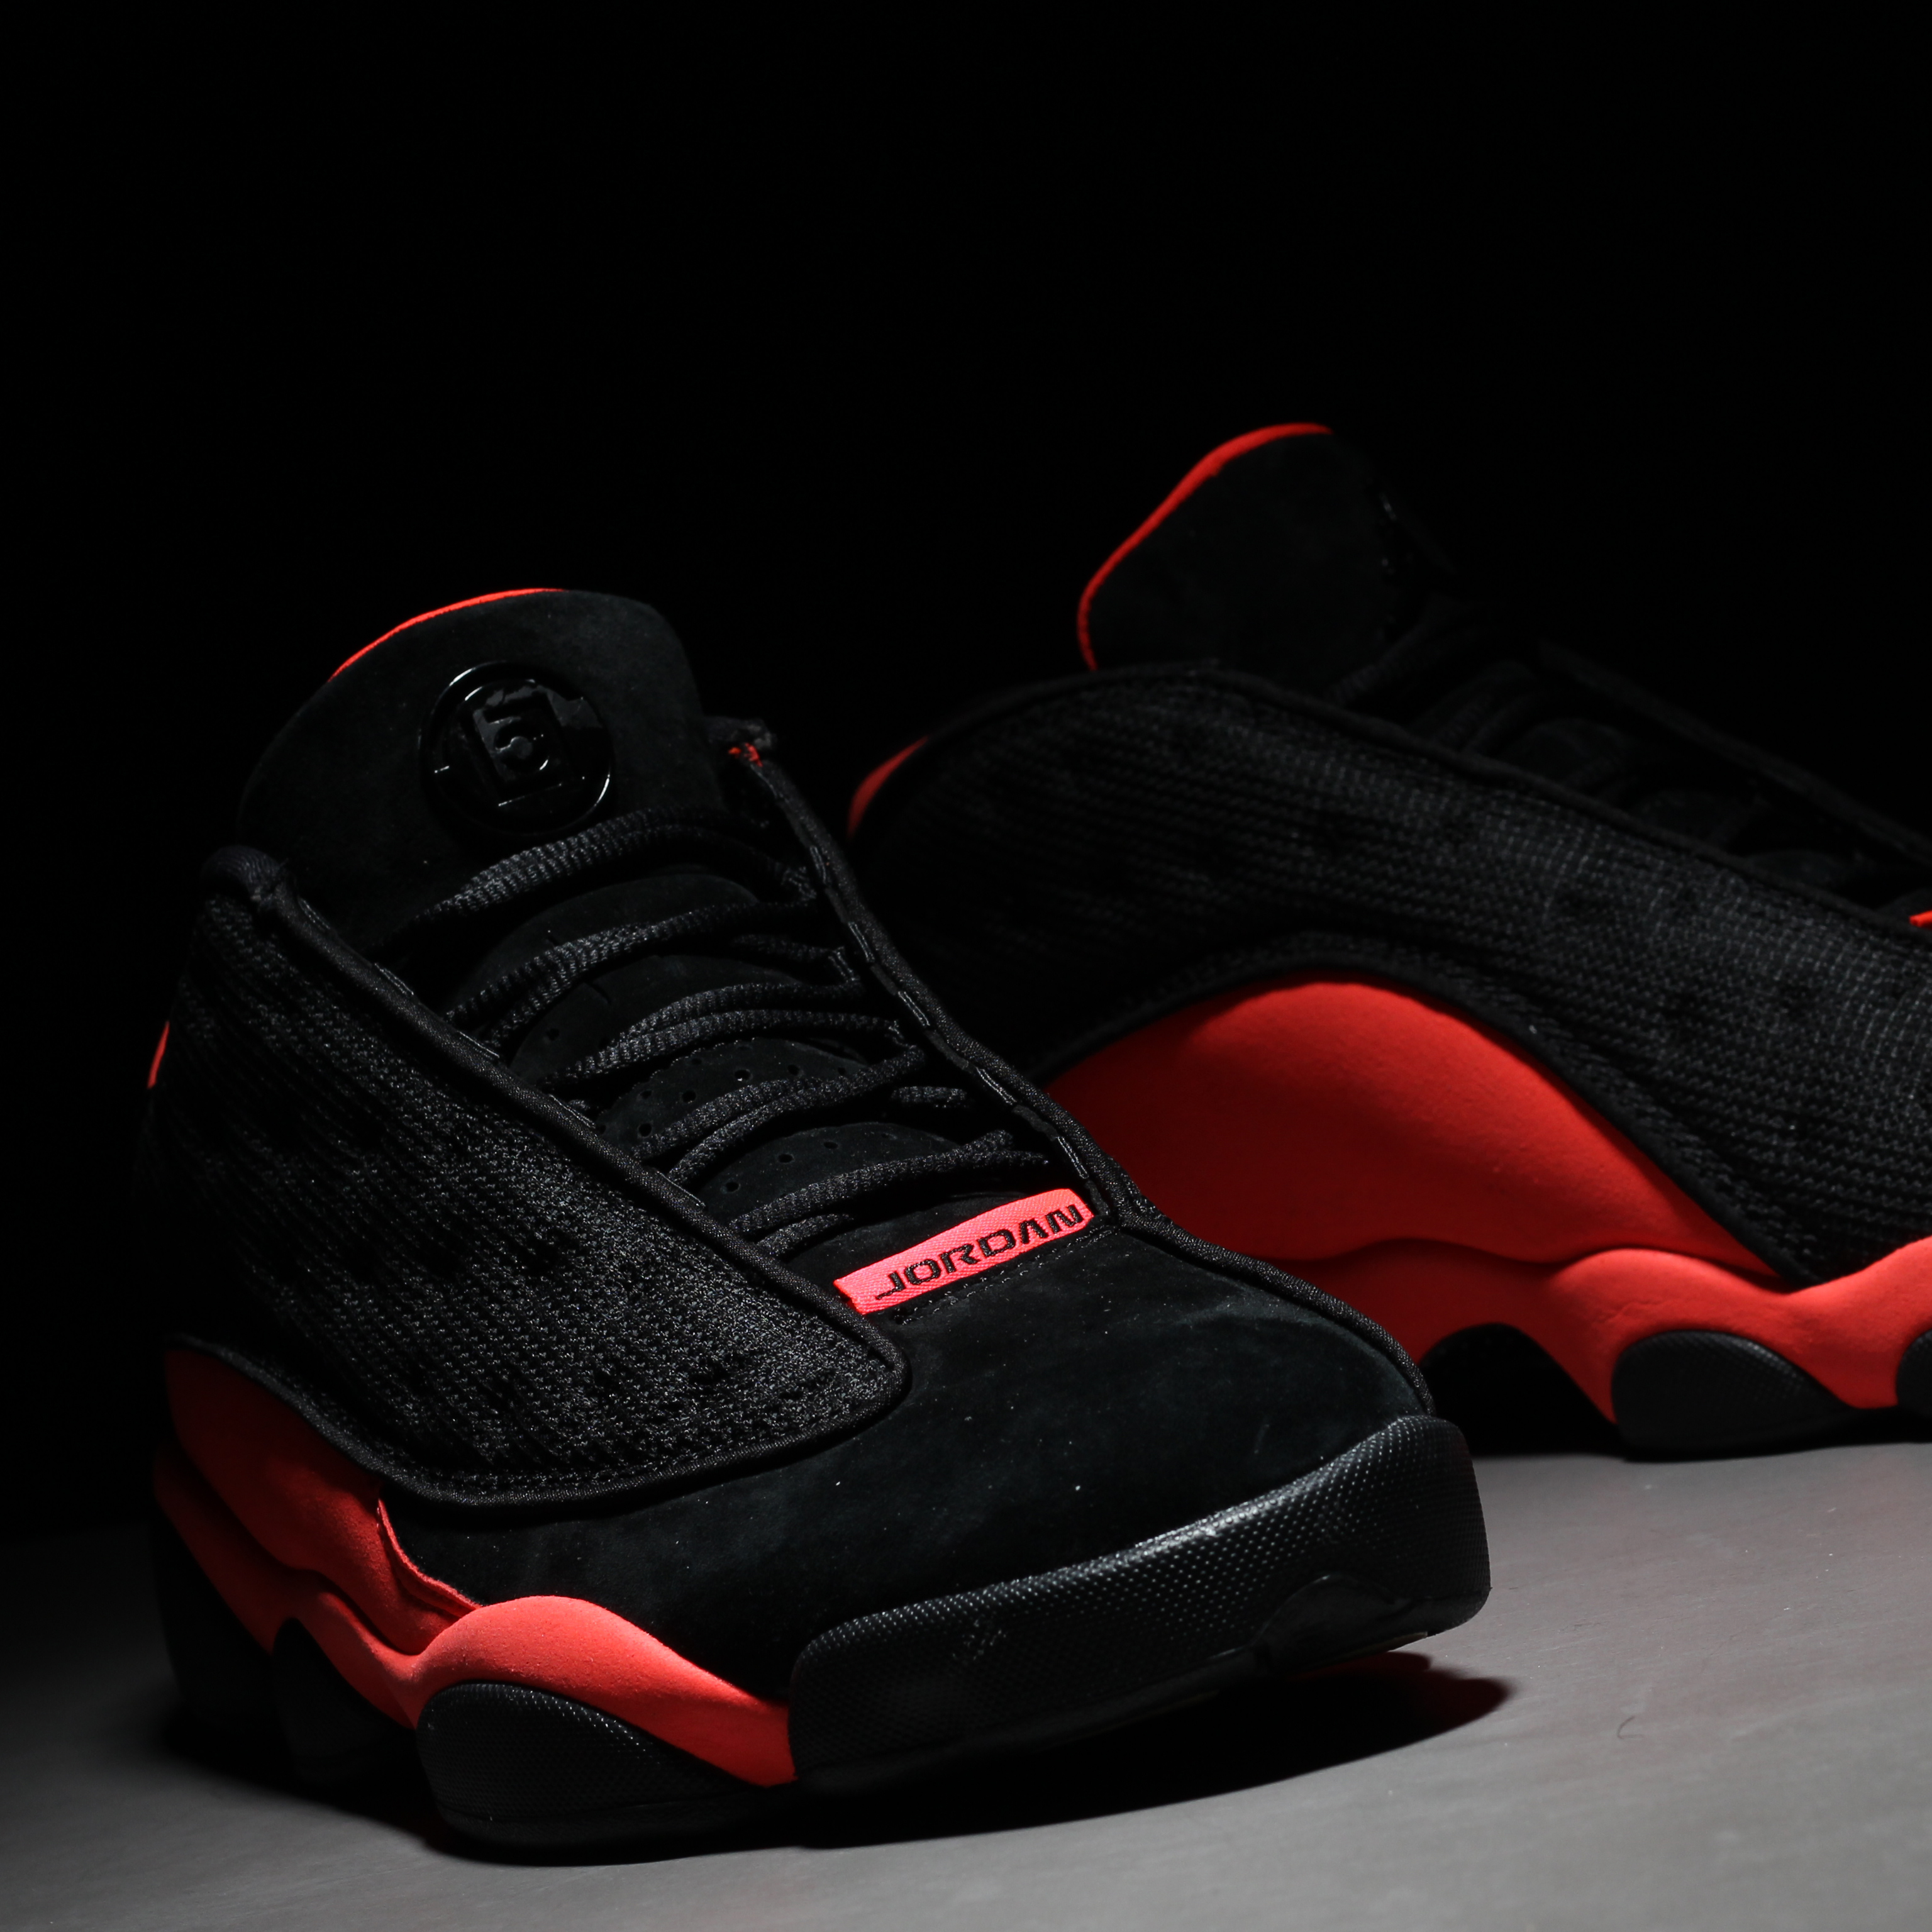 CLOT x Air Jordan 13 Low Black Infrared (Infra Bred) •